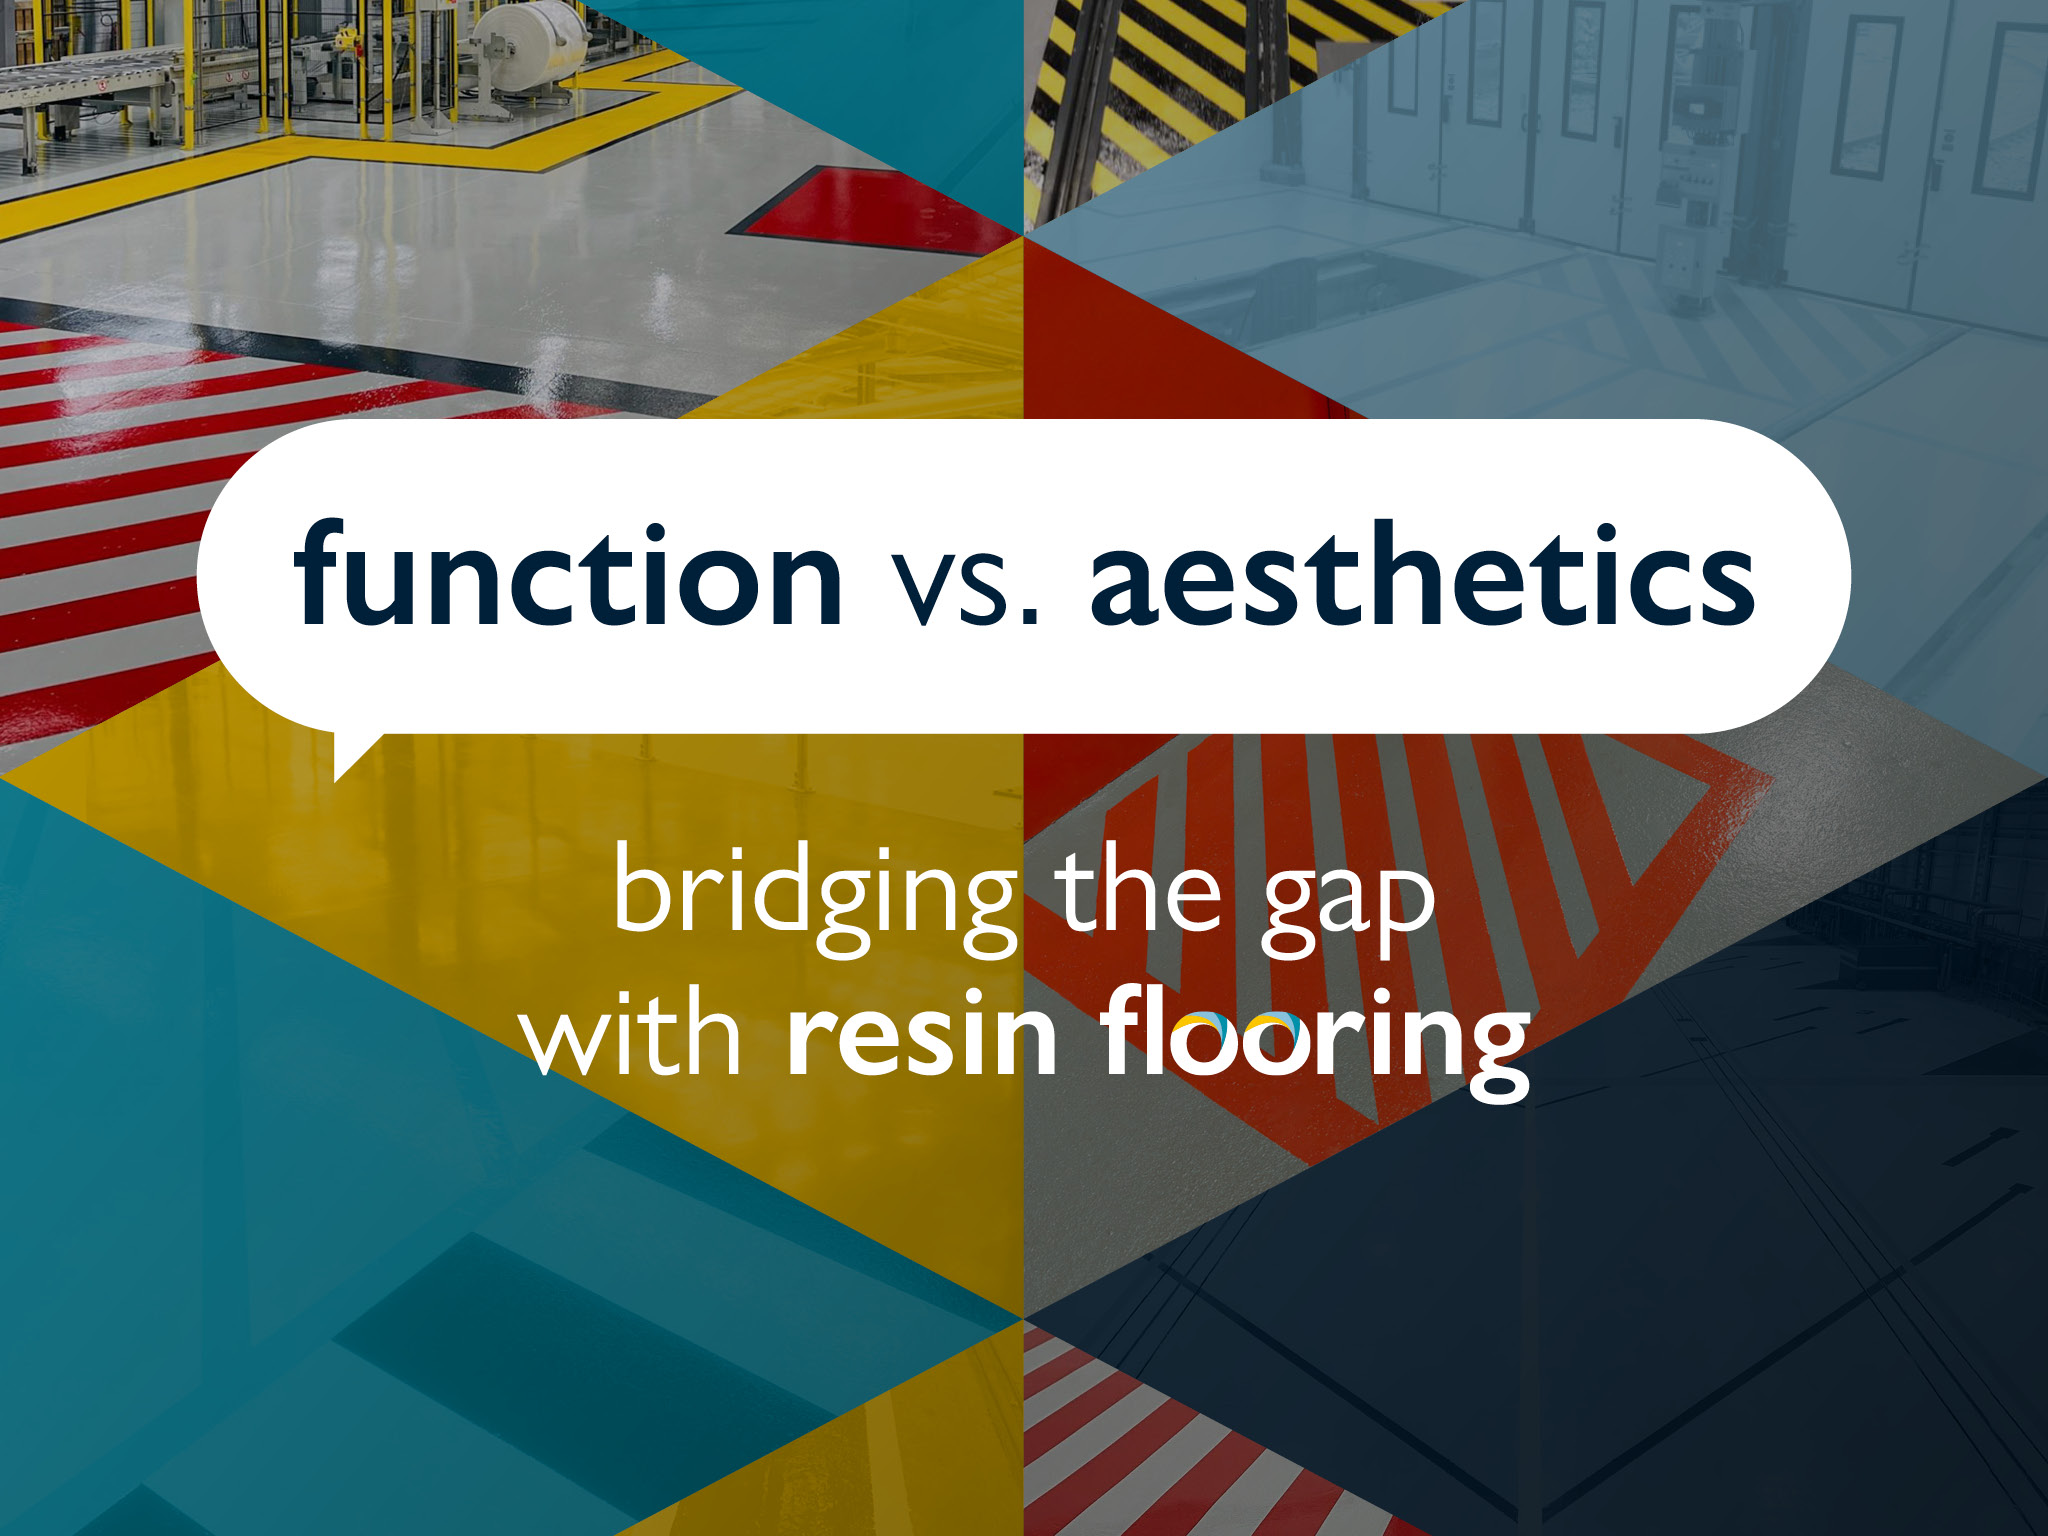 Bridging the gap between function & aesthetics with flooring in industrial facilities